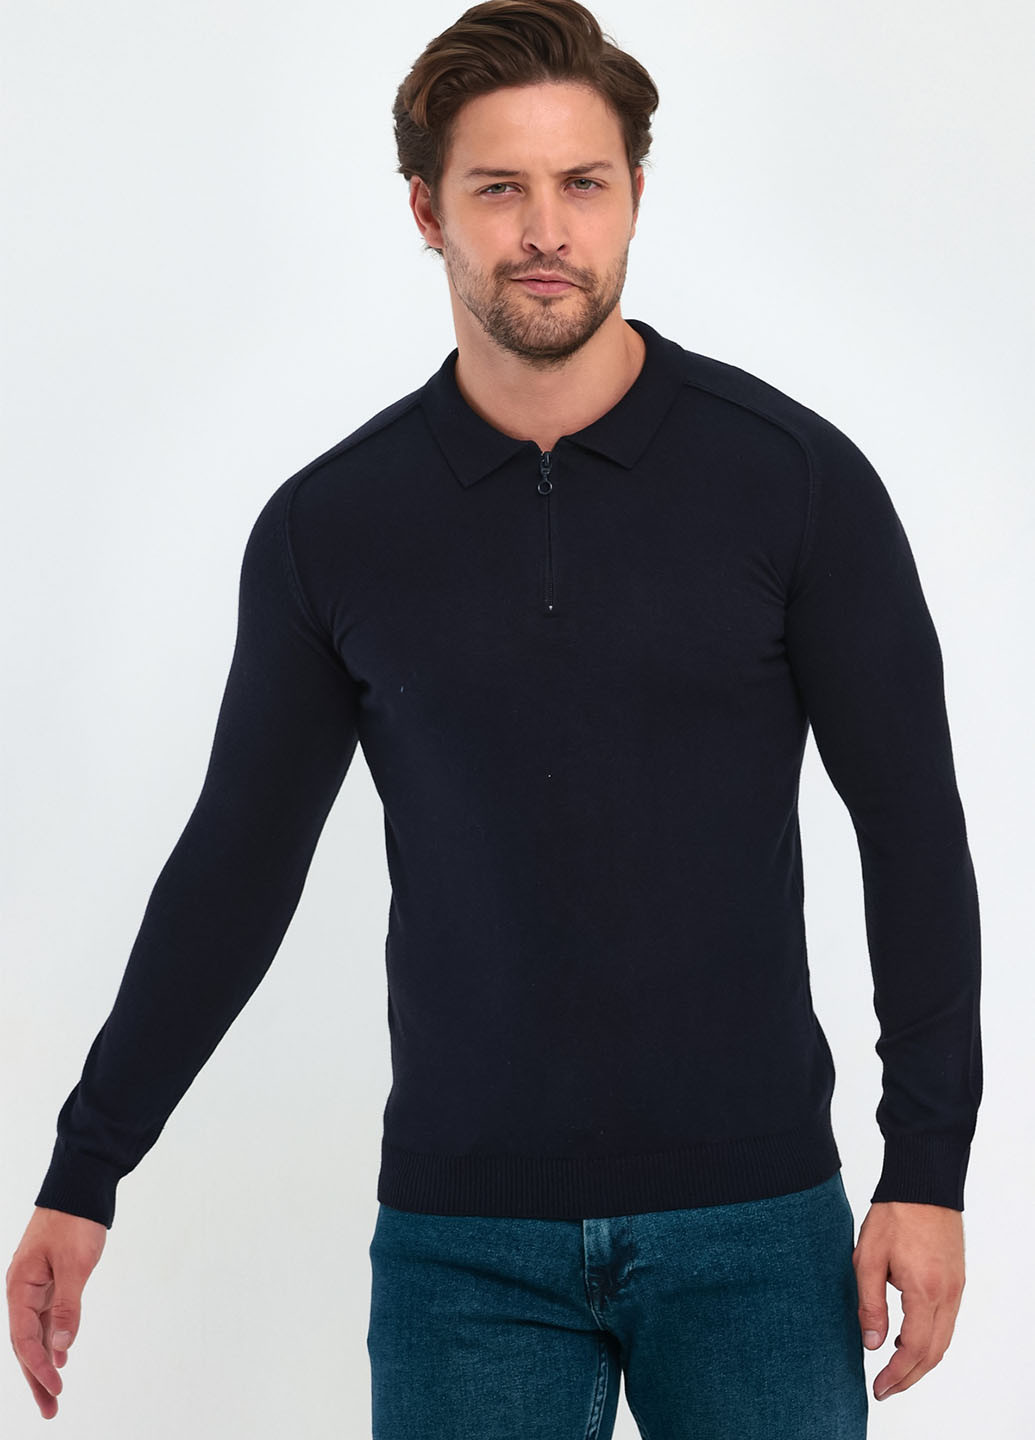 Темно-синий демисезонный свитер джемпер Trend Collection